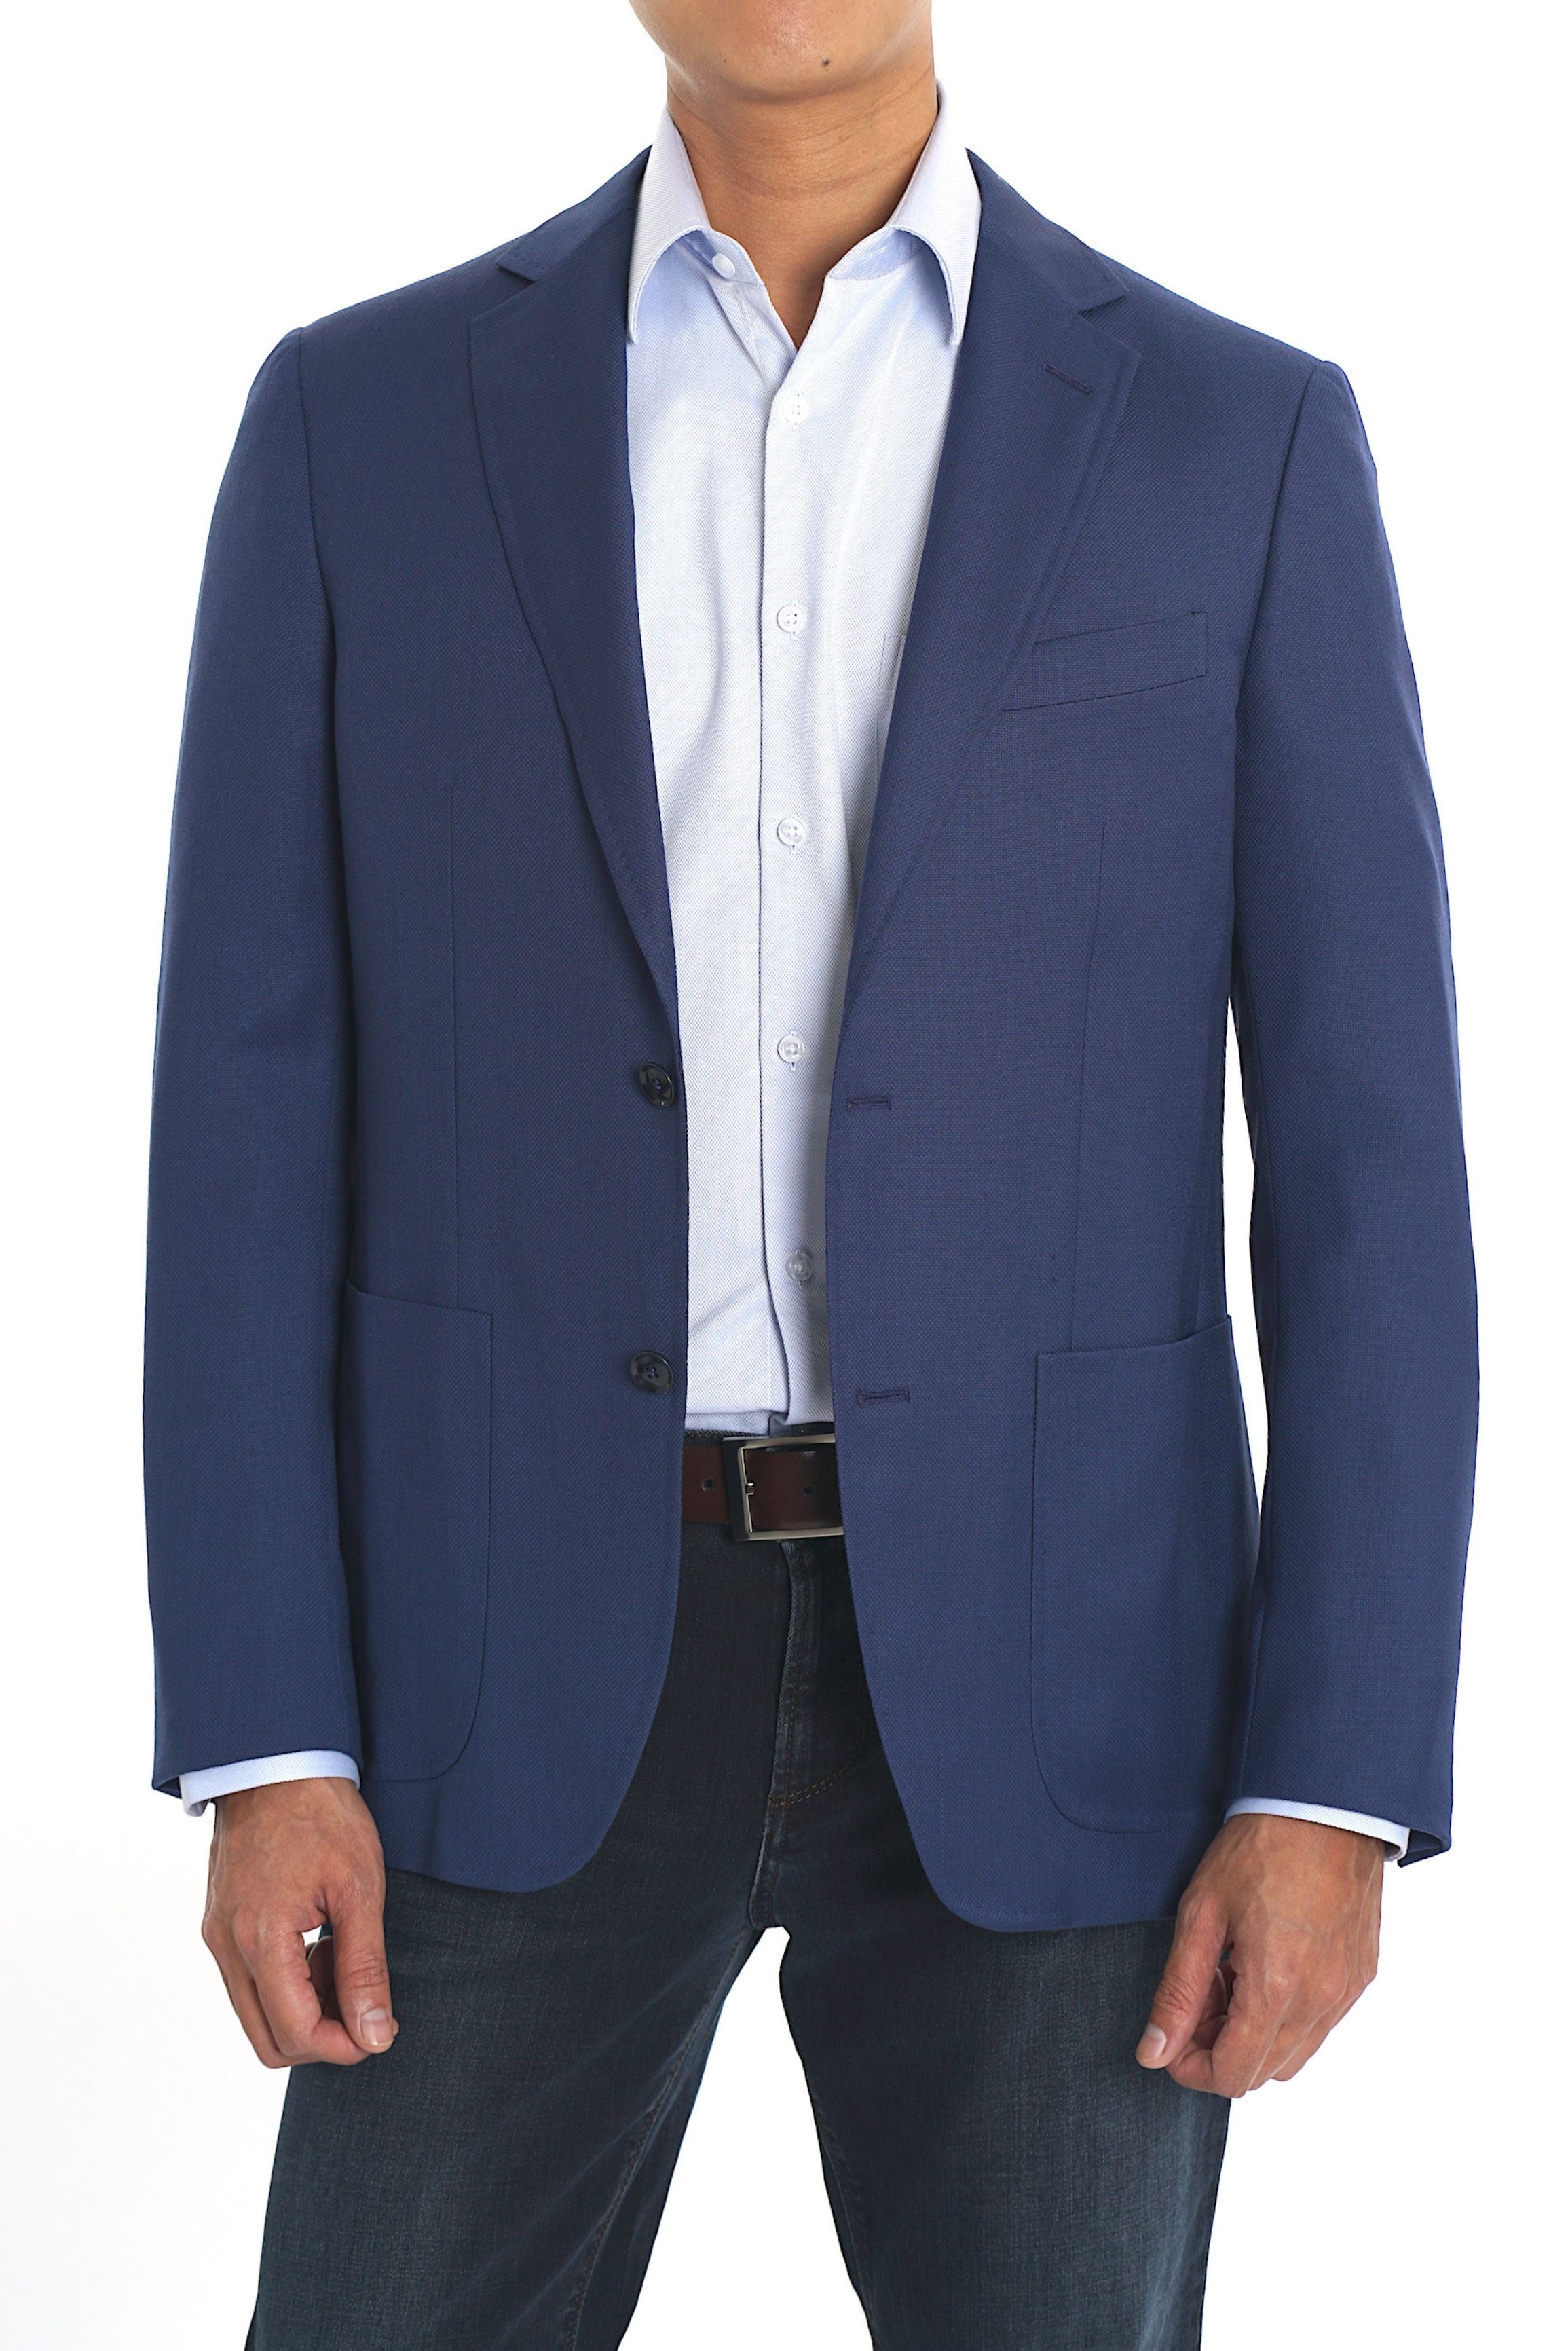 Pal Zileri Modern Royal Blue Jacket - Mastroianni Fashions